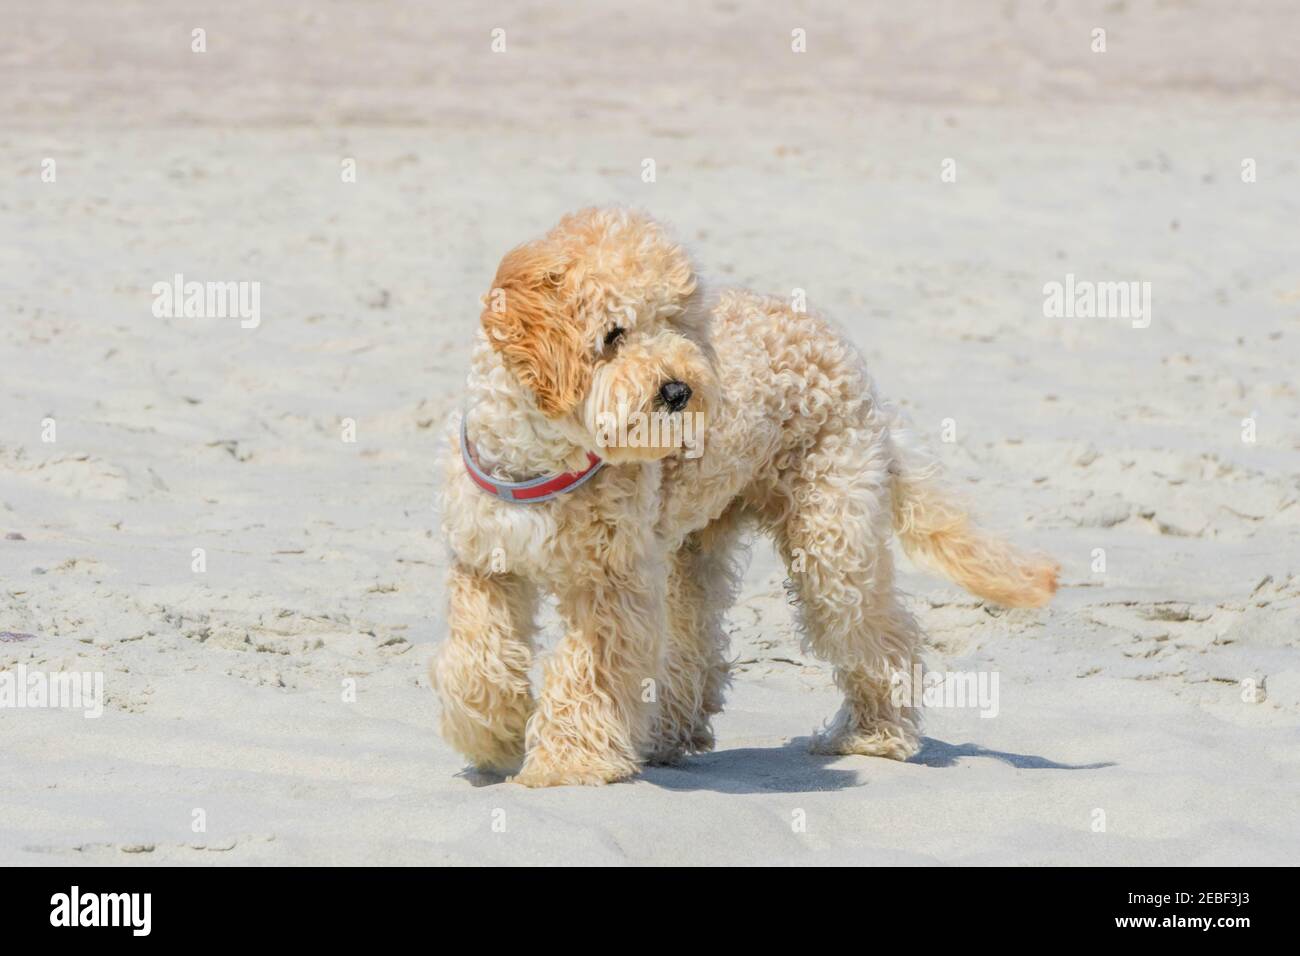 Niedliche Golddoodle Hund Welpen am Sandstrand in der Nähe des Meeres. Beigefarbener doggy auf ähnlicher Farbe beigefarbener sandiger Meeresküste. Golddoodles sind Hunde Mischung aus Golden Stockfoto